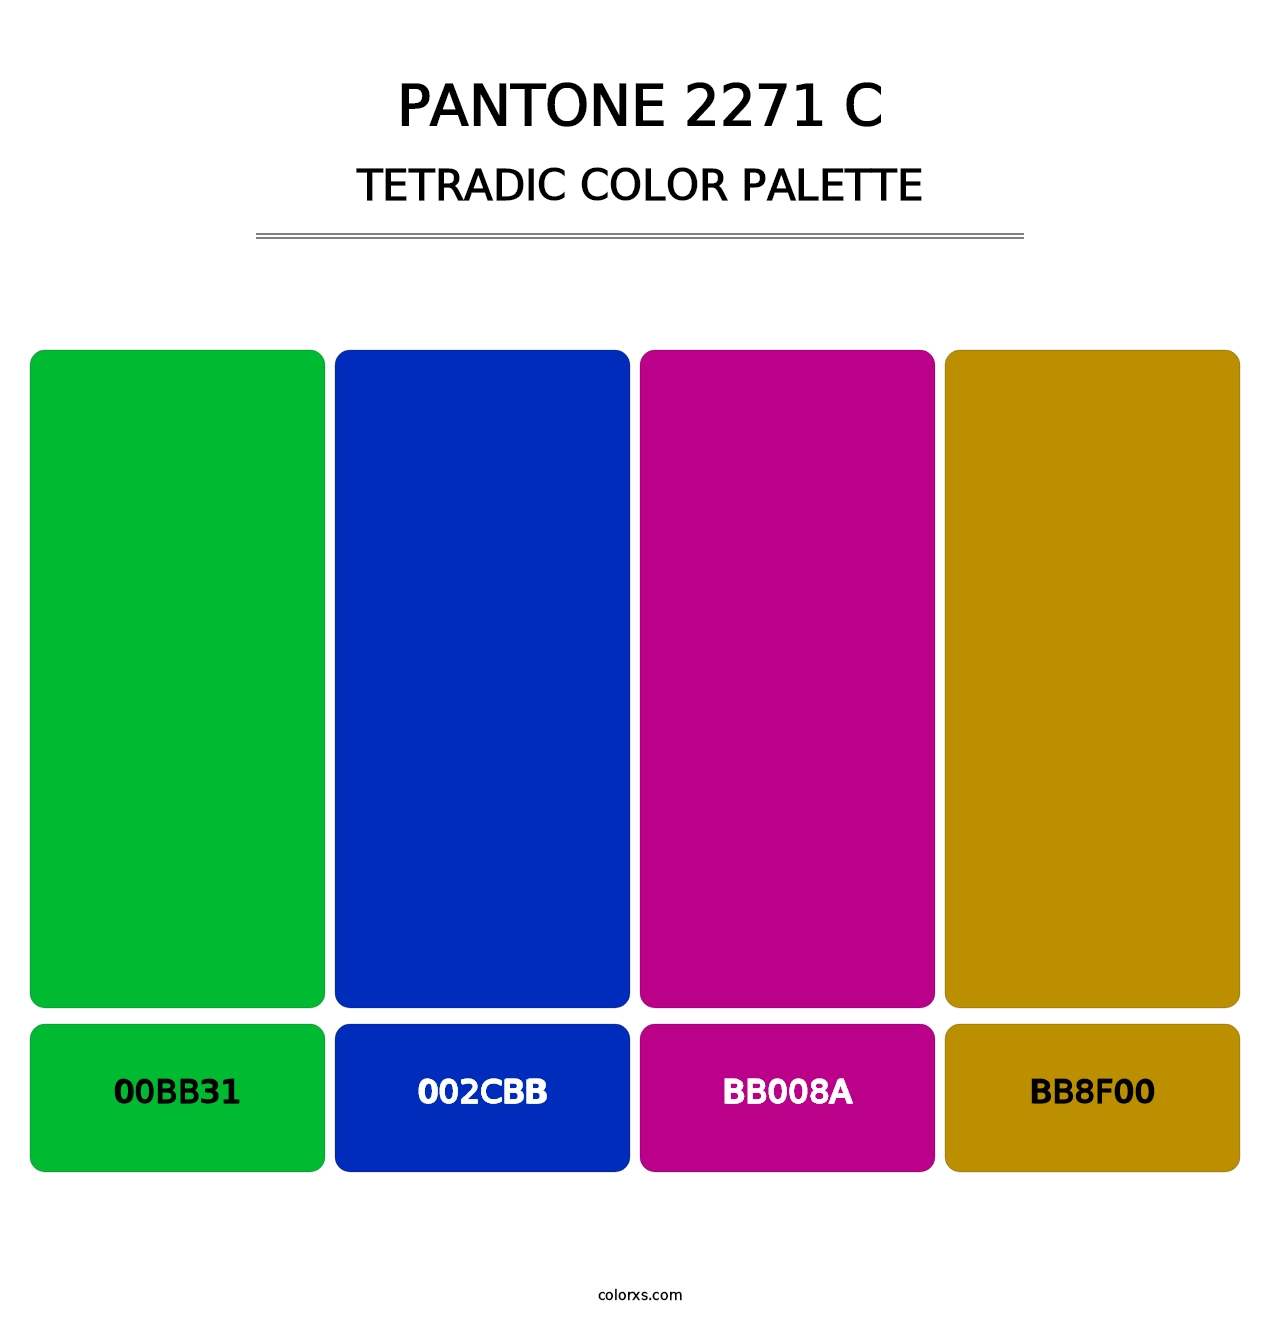 PANTONE 2271 C - Tetradic Color Palette